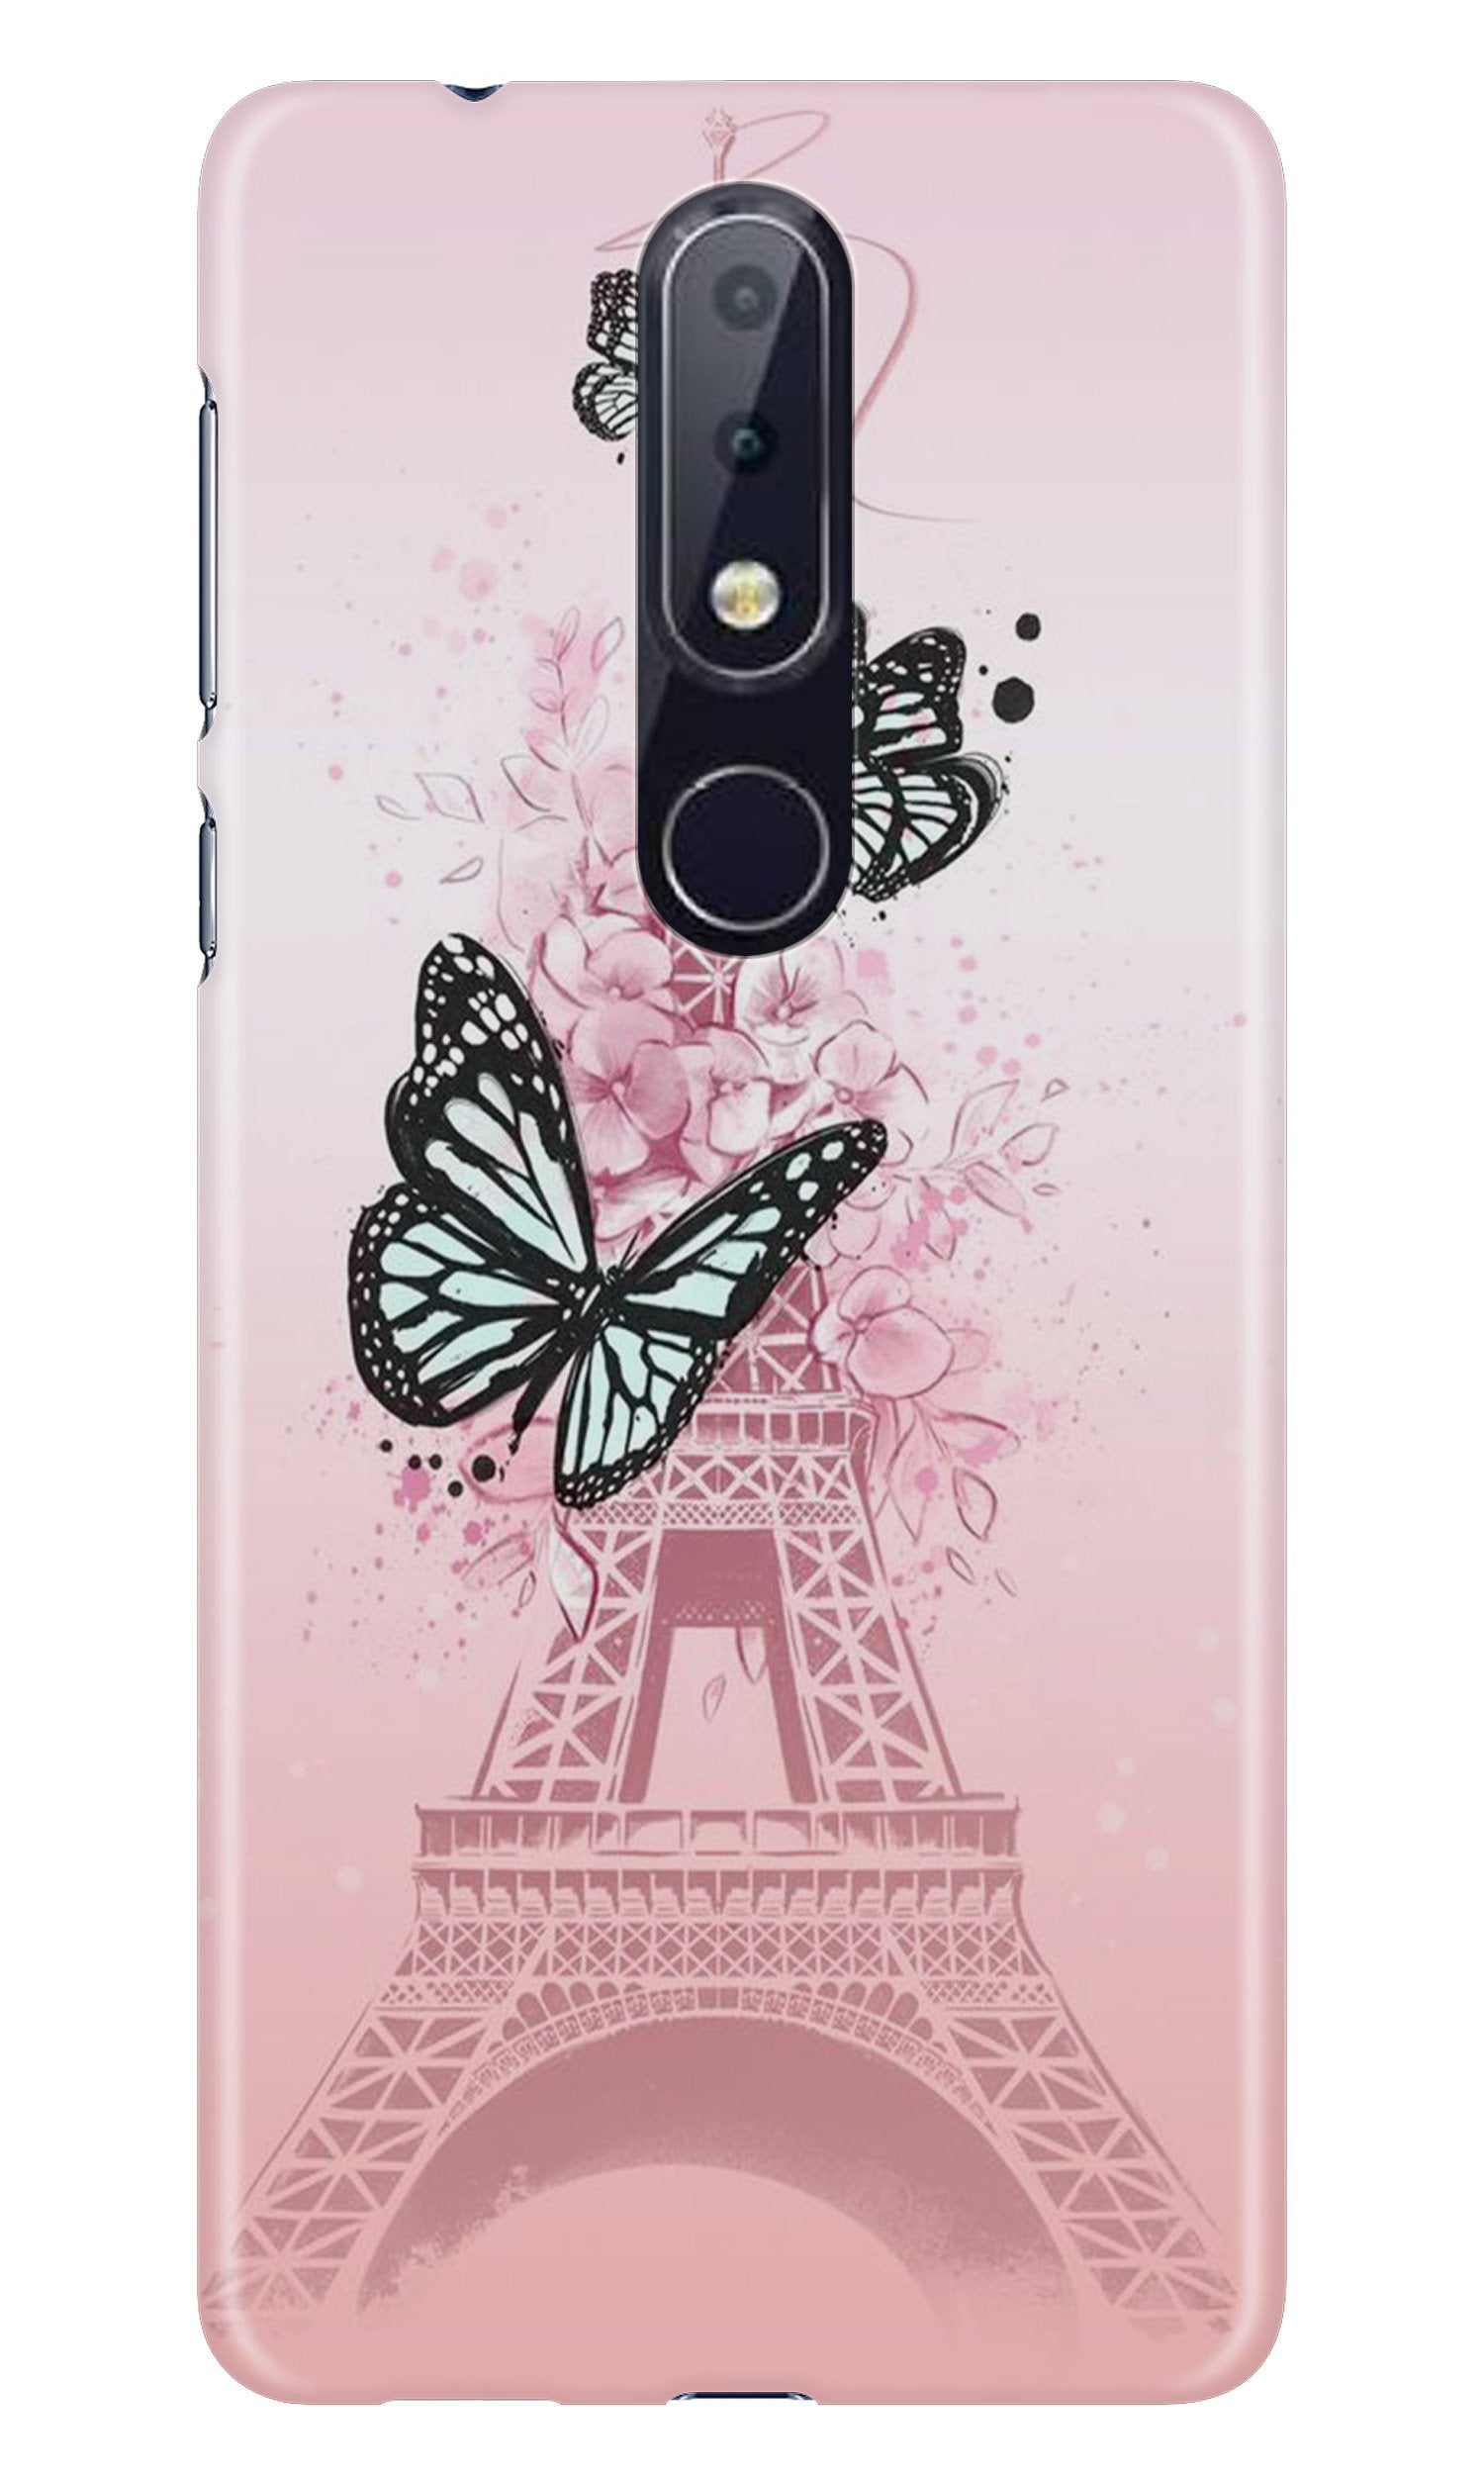 Eiffel Tower Case for Nokia 7.1 (Design No. 211)